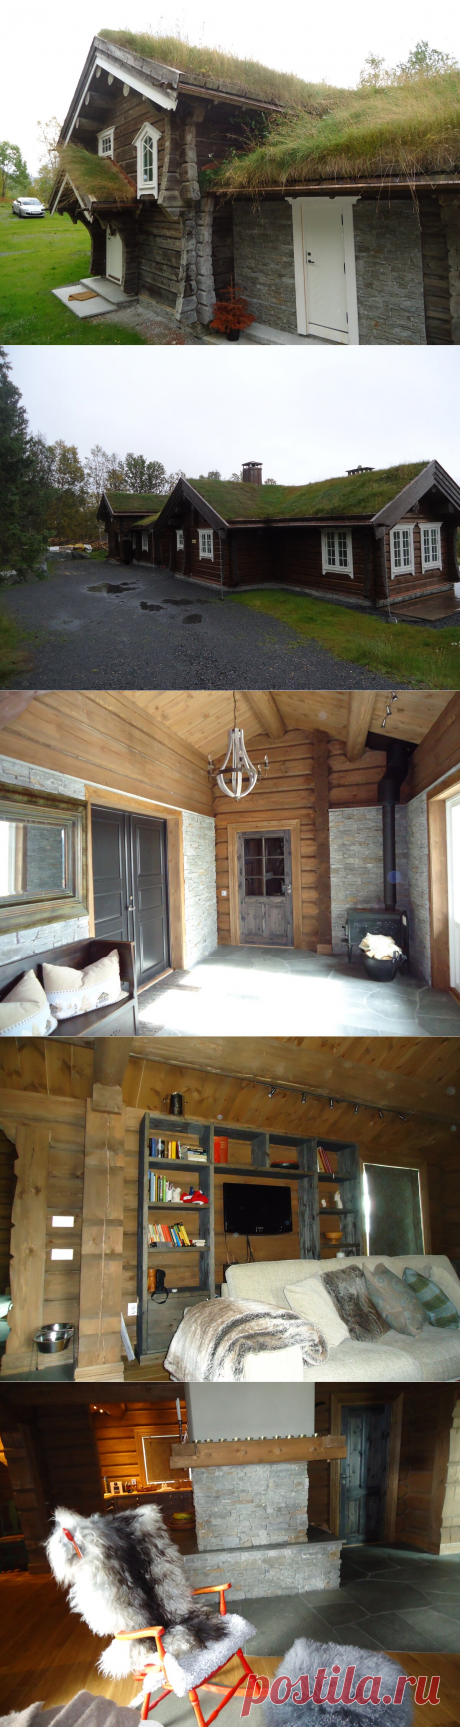 Как выглядит снаружи и изнутри хитте(hytte) - норвежский дом в горах. Фото и немного статистики | стелла ларсен | Яндекс Дзен